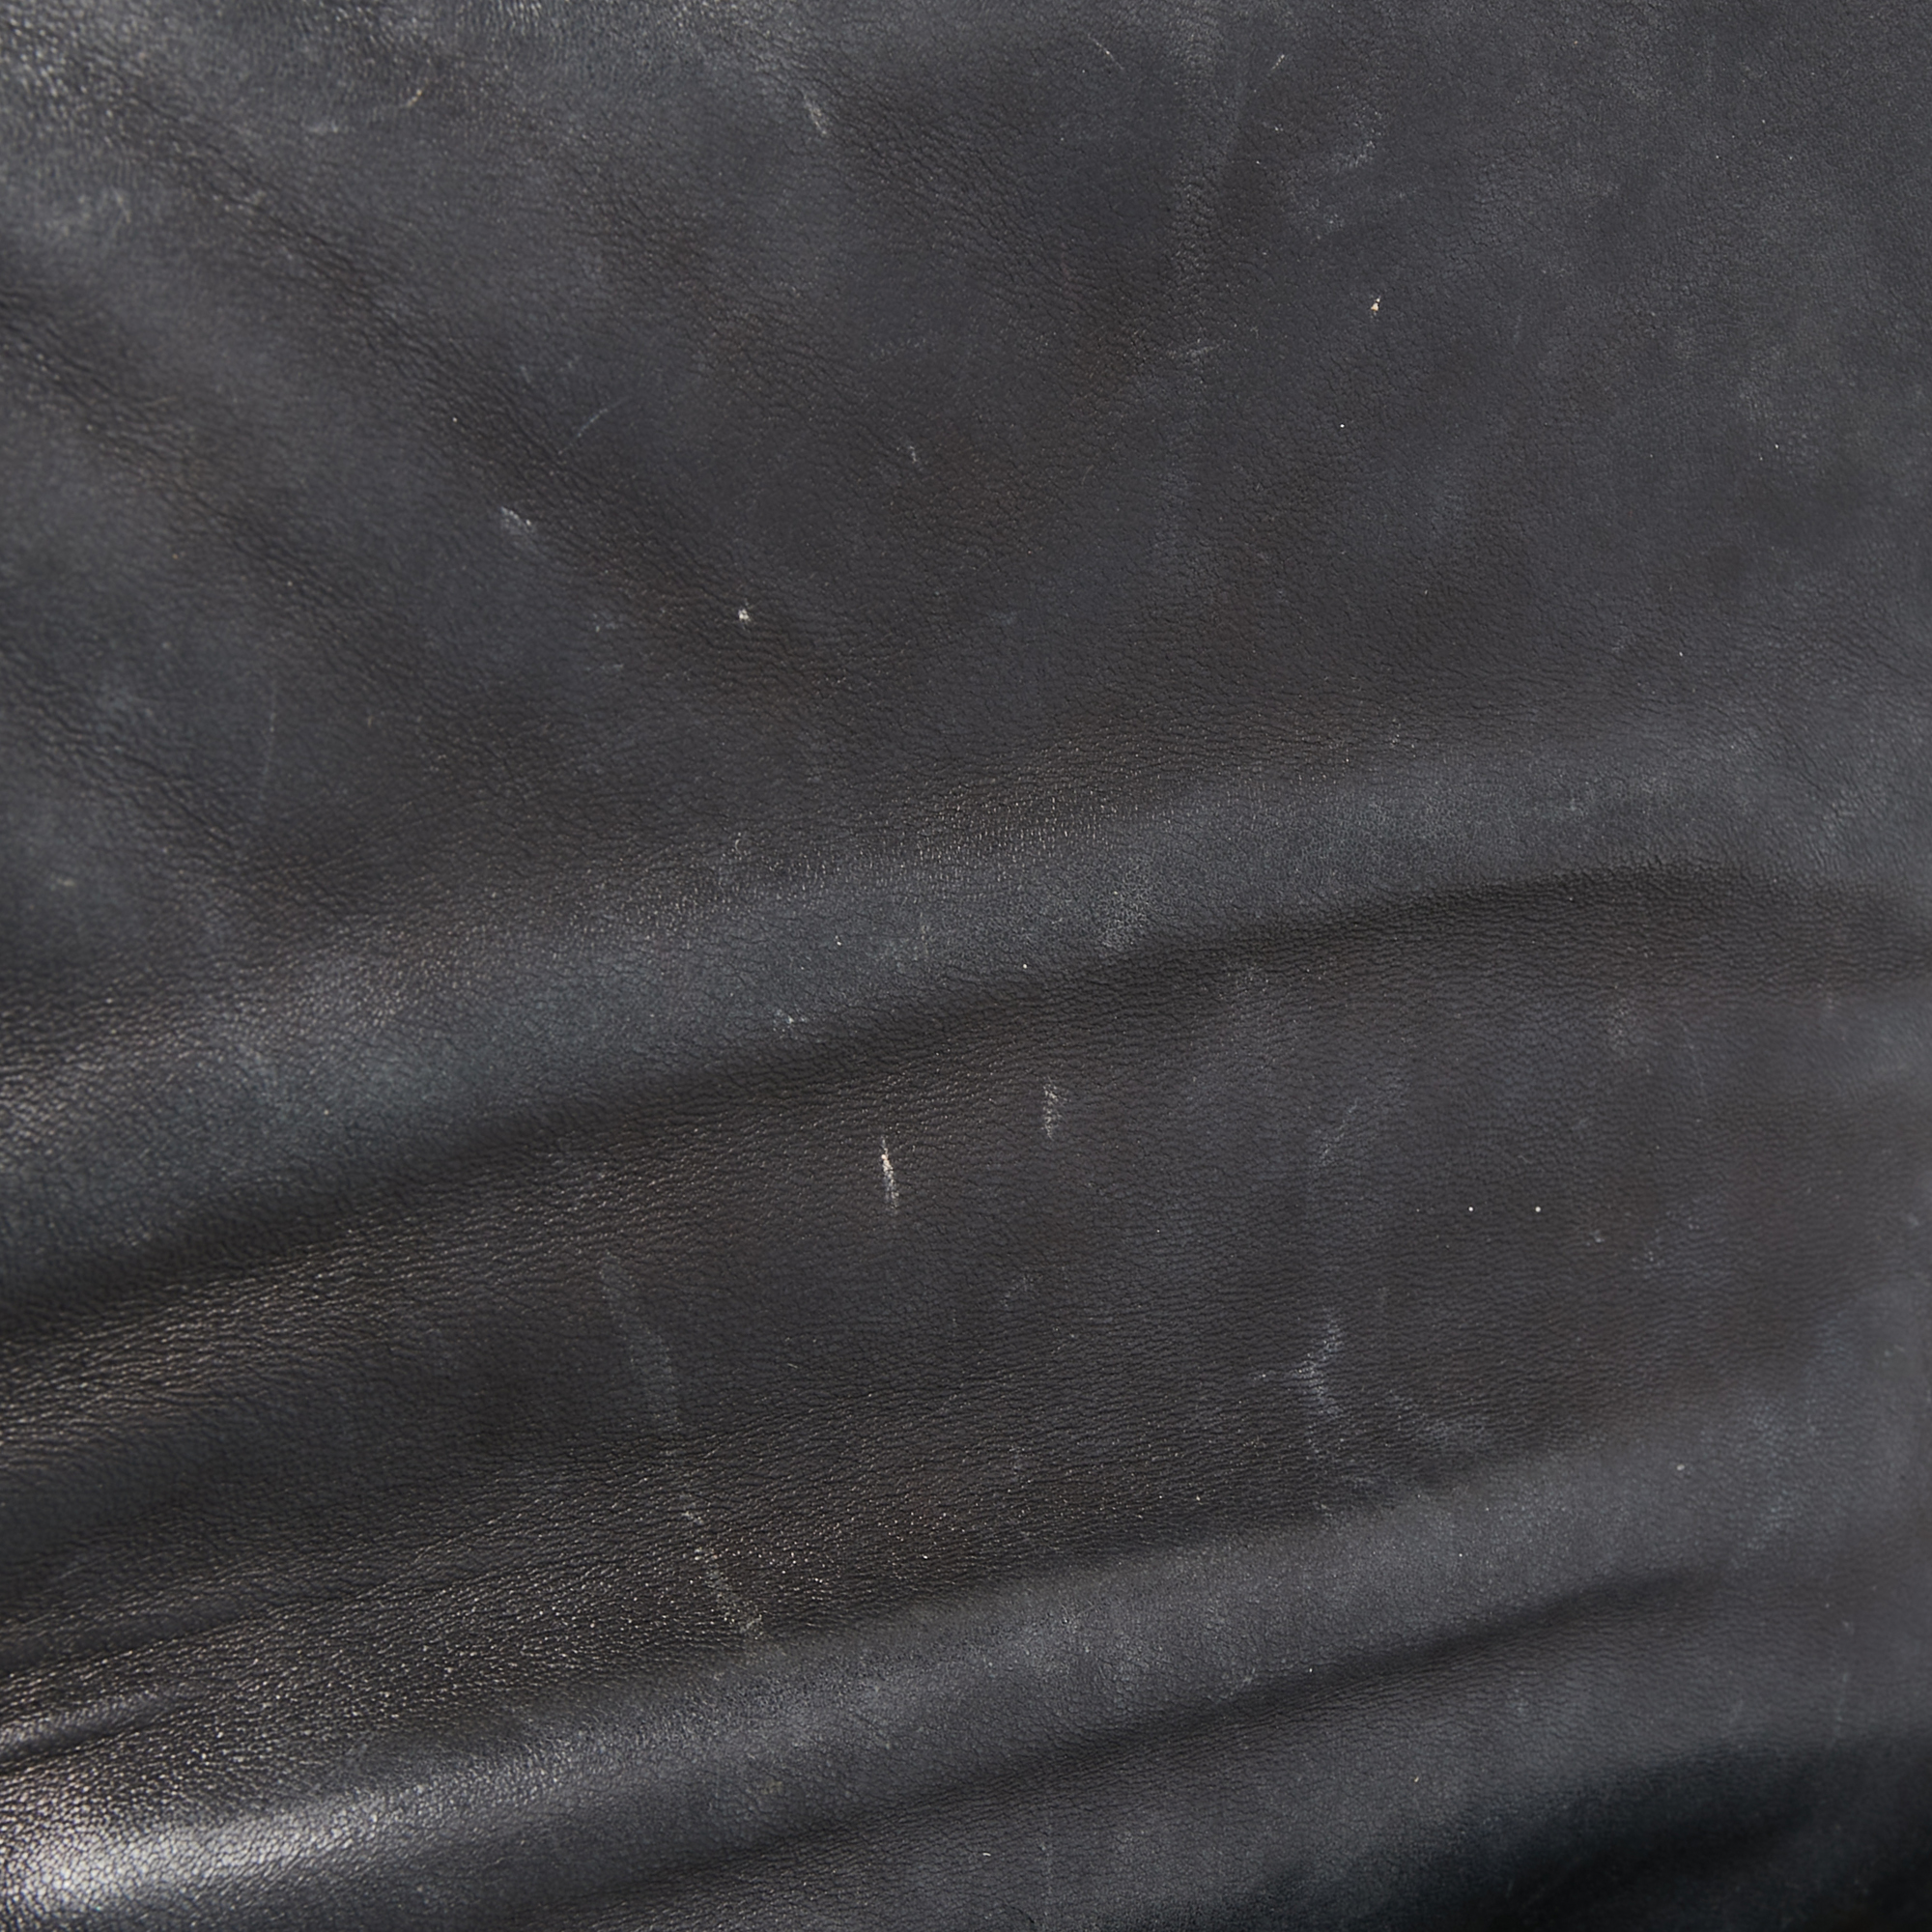 CH Carolina Herrera Black Quilted Patent Leather Flap Shoulder Bag